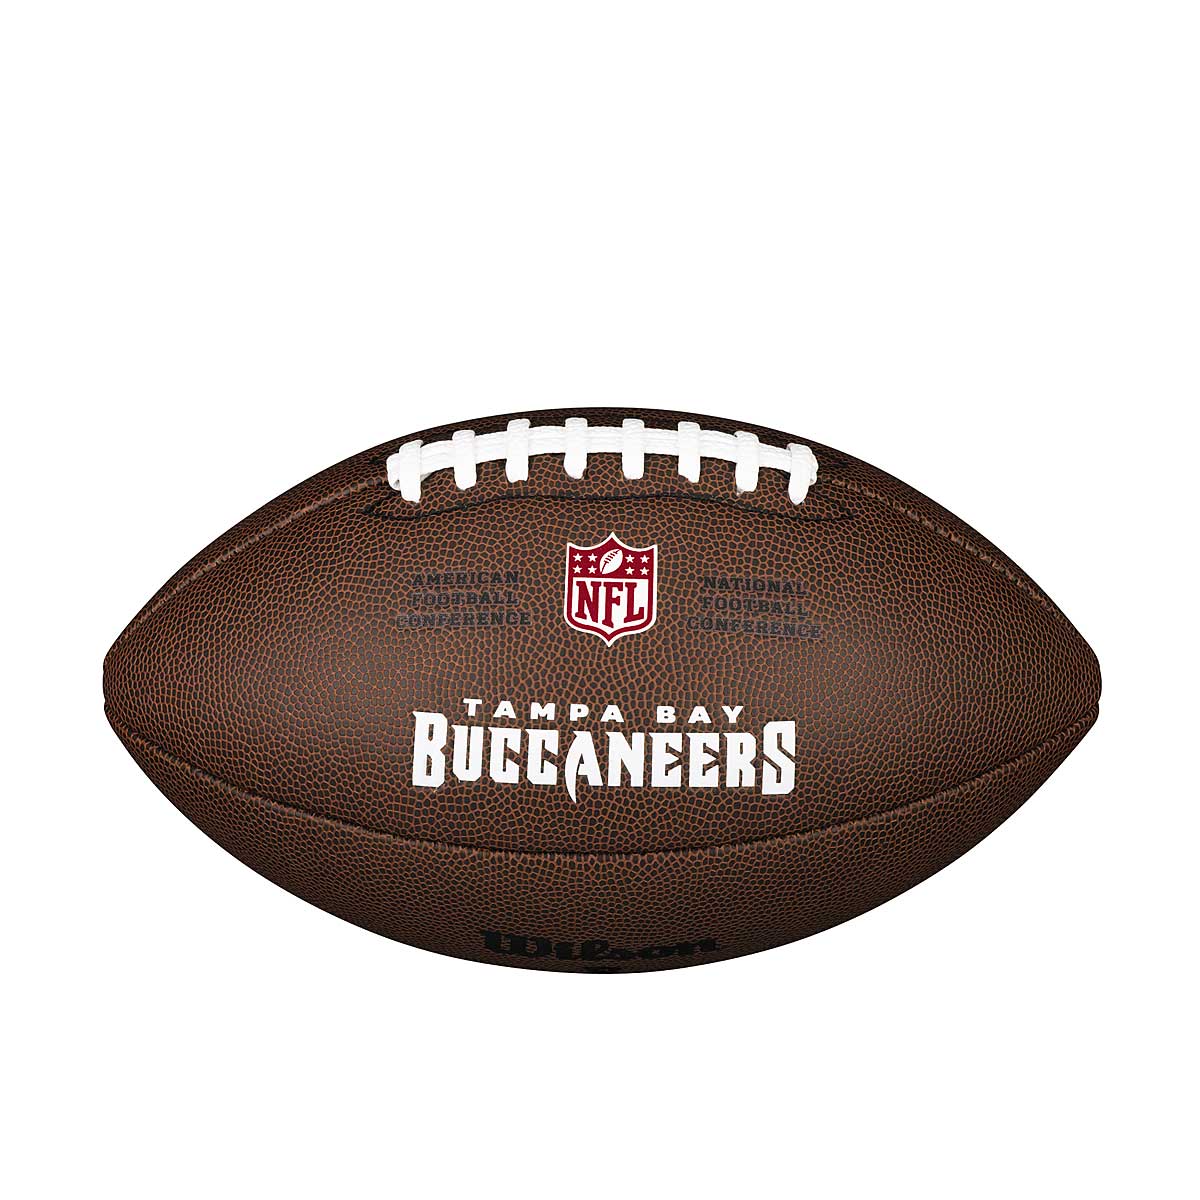 Wilson Nfl Licensed Official Football Tampa Bay Buccaneers, Brown